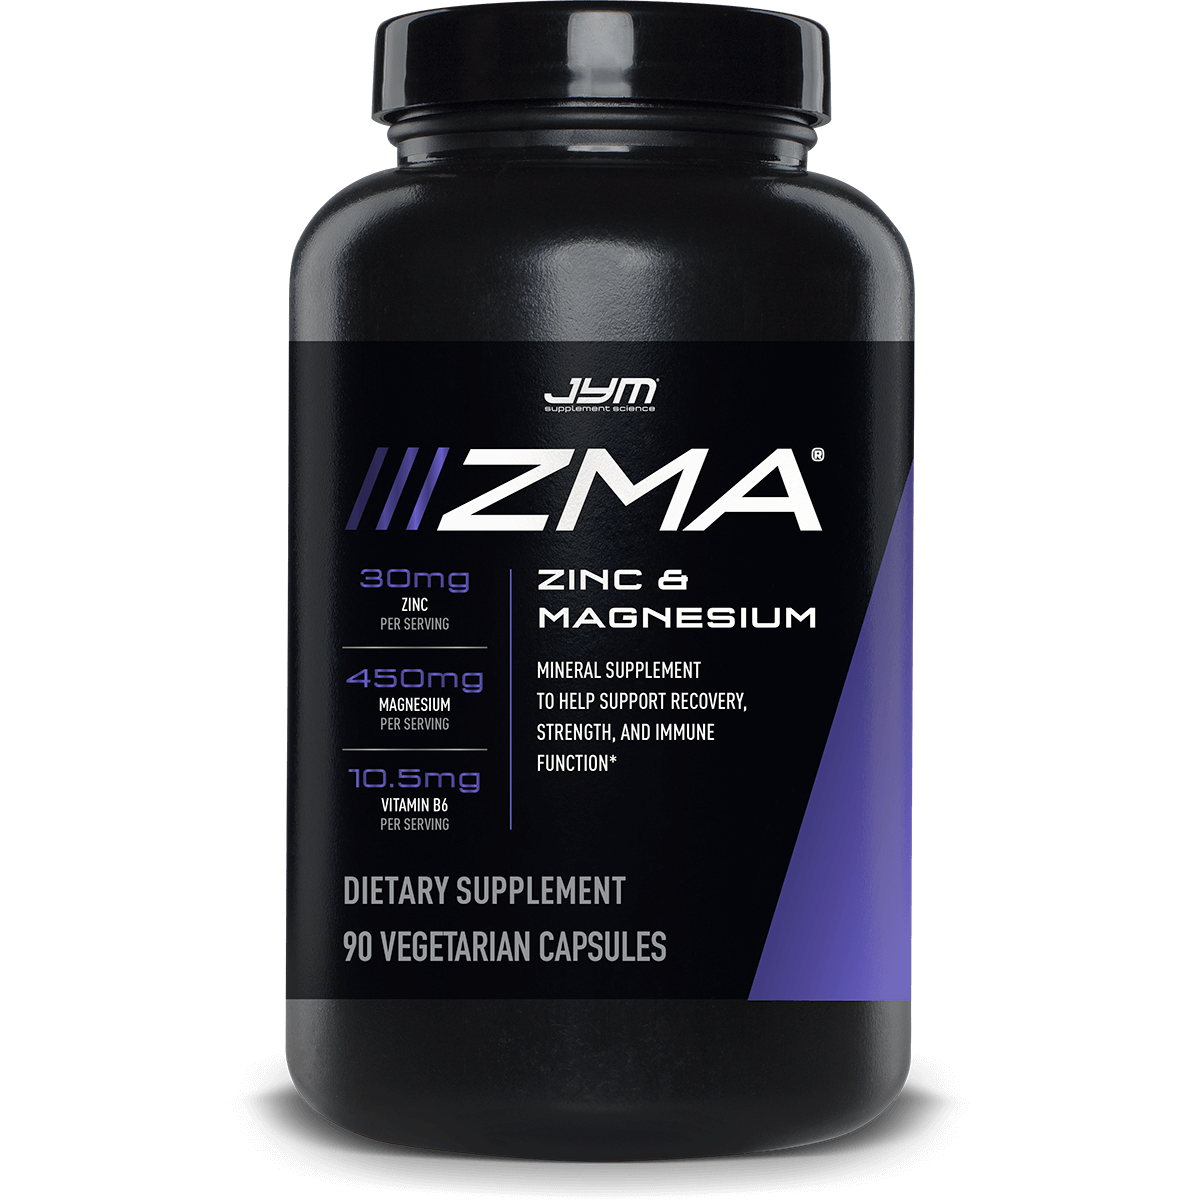 ZMA - Zinc Magnesium Aspartate Capsules - цинк, магний, b6 (90 капсул) Optimum Nutrition. Optimum Nutrition ZMA цинк магний в6 90 капс.. ZMA цинк магний в6. Now ZMA 90 капсул.